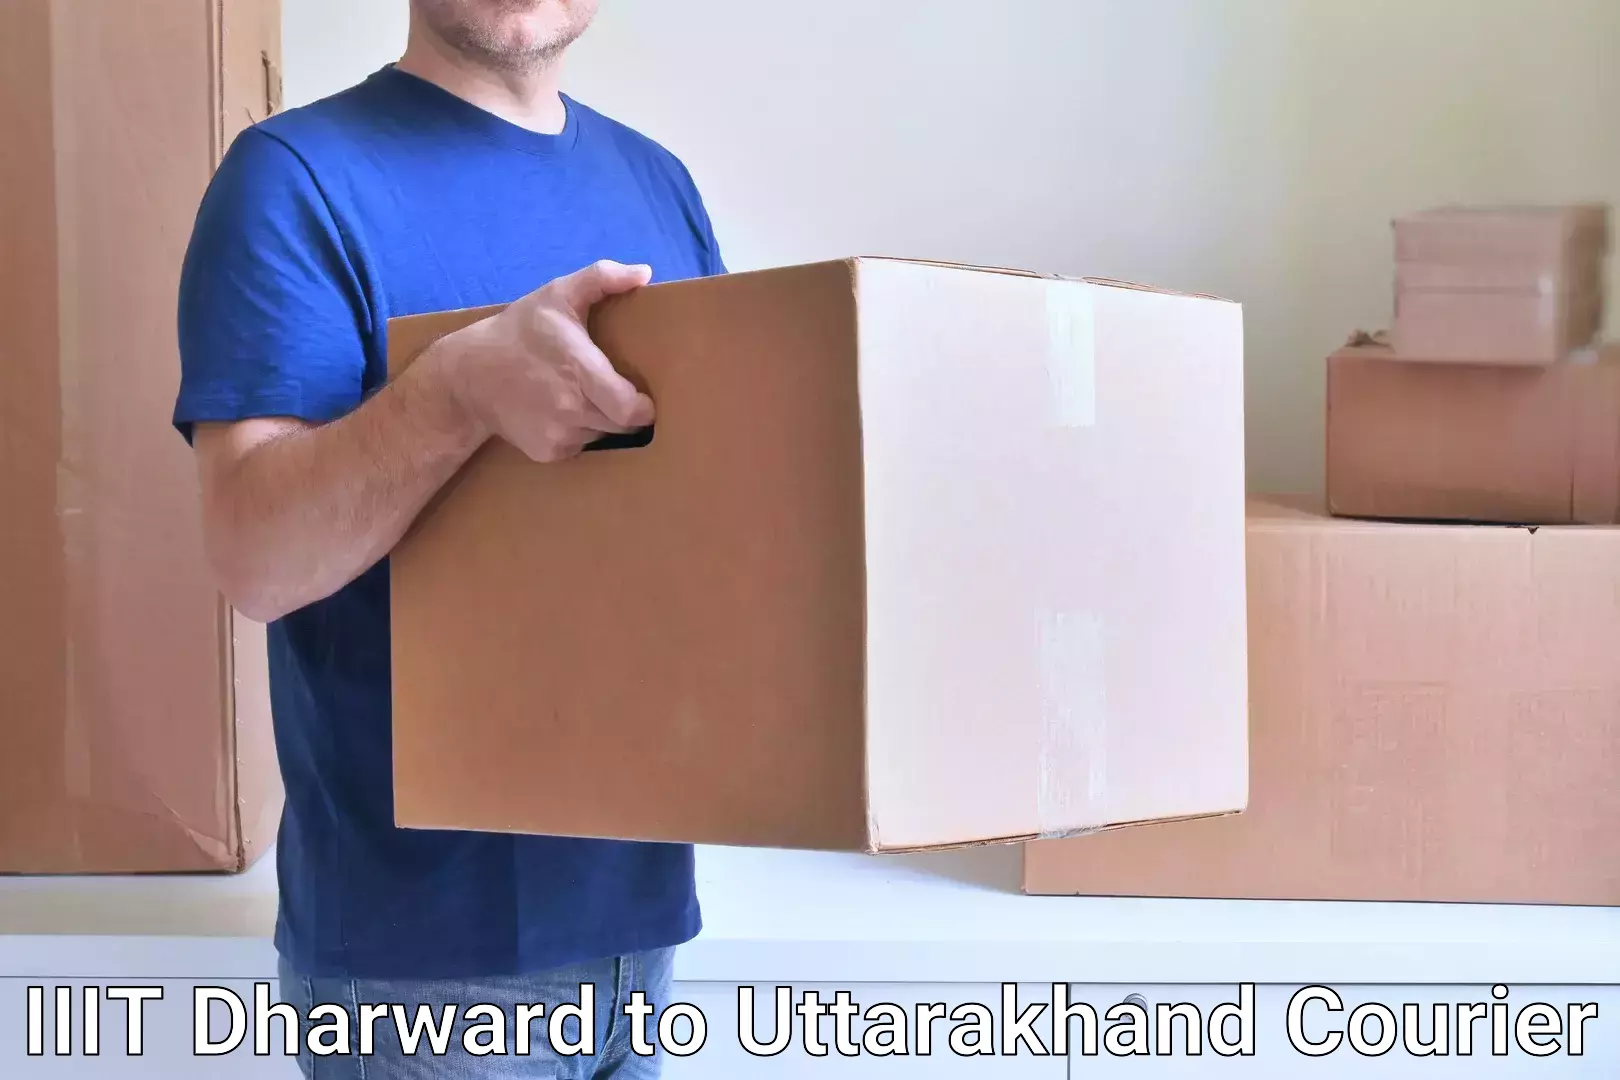 Efficient cargo services in IIIT Dharward to Dehradun